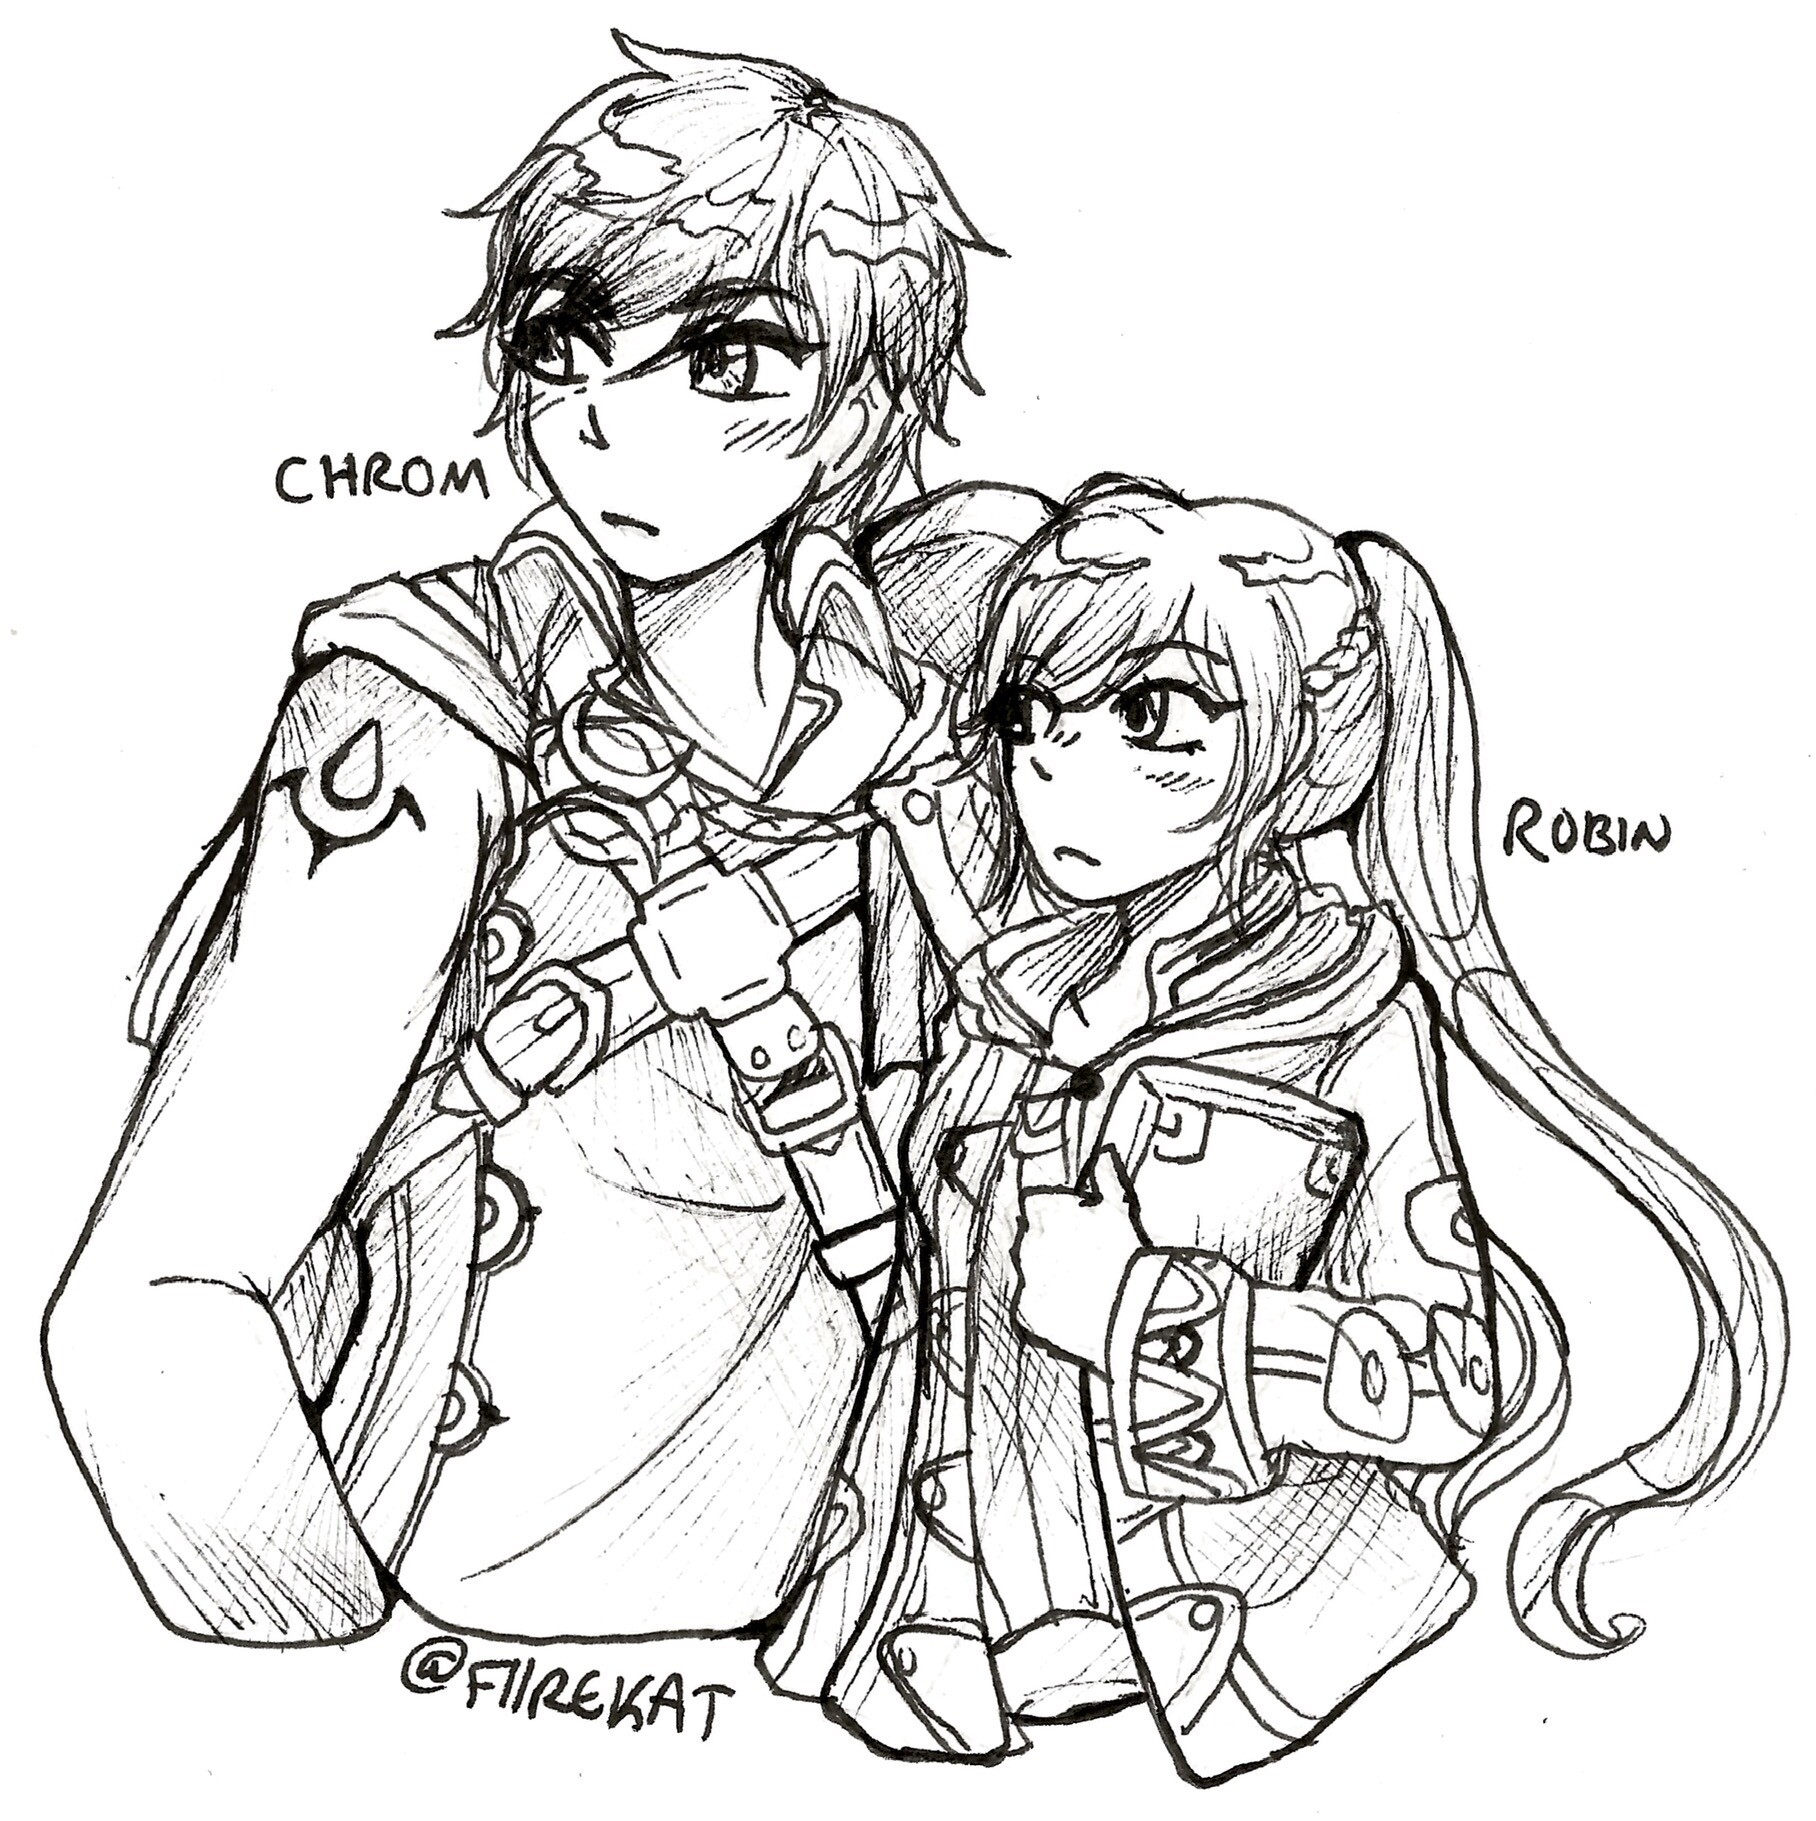 ArtStation - Chrom and Robin